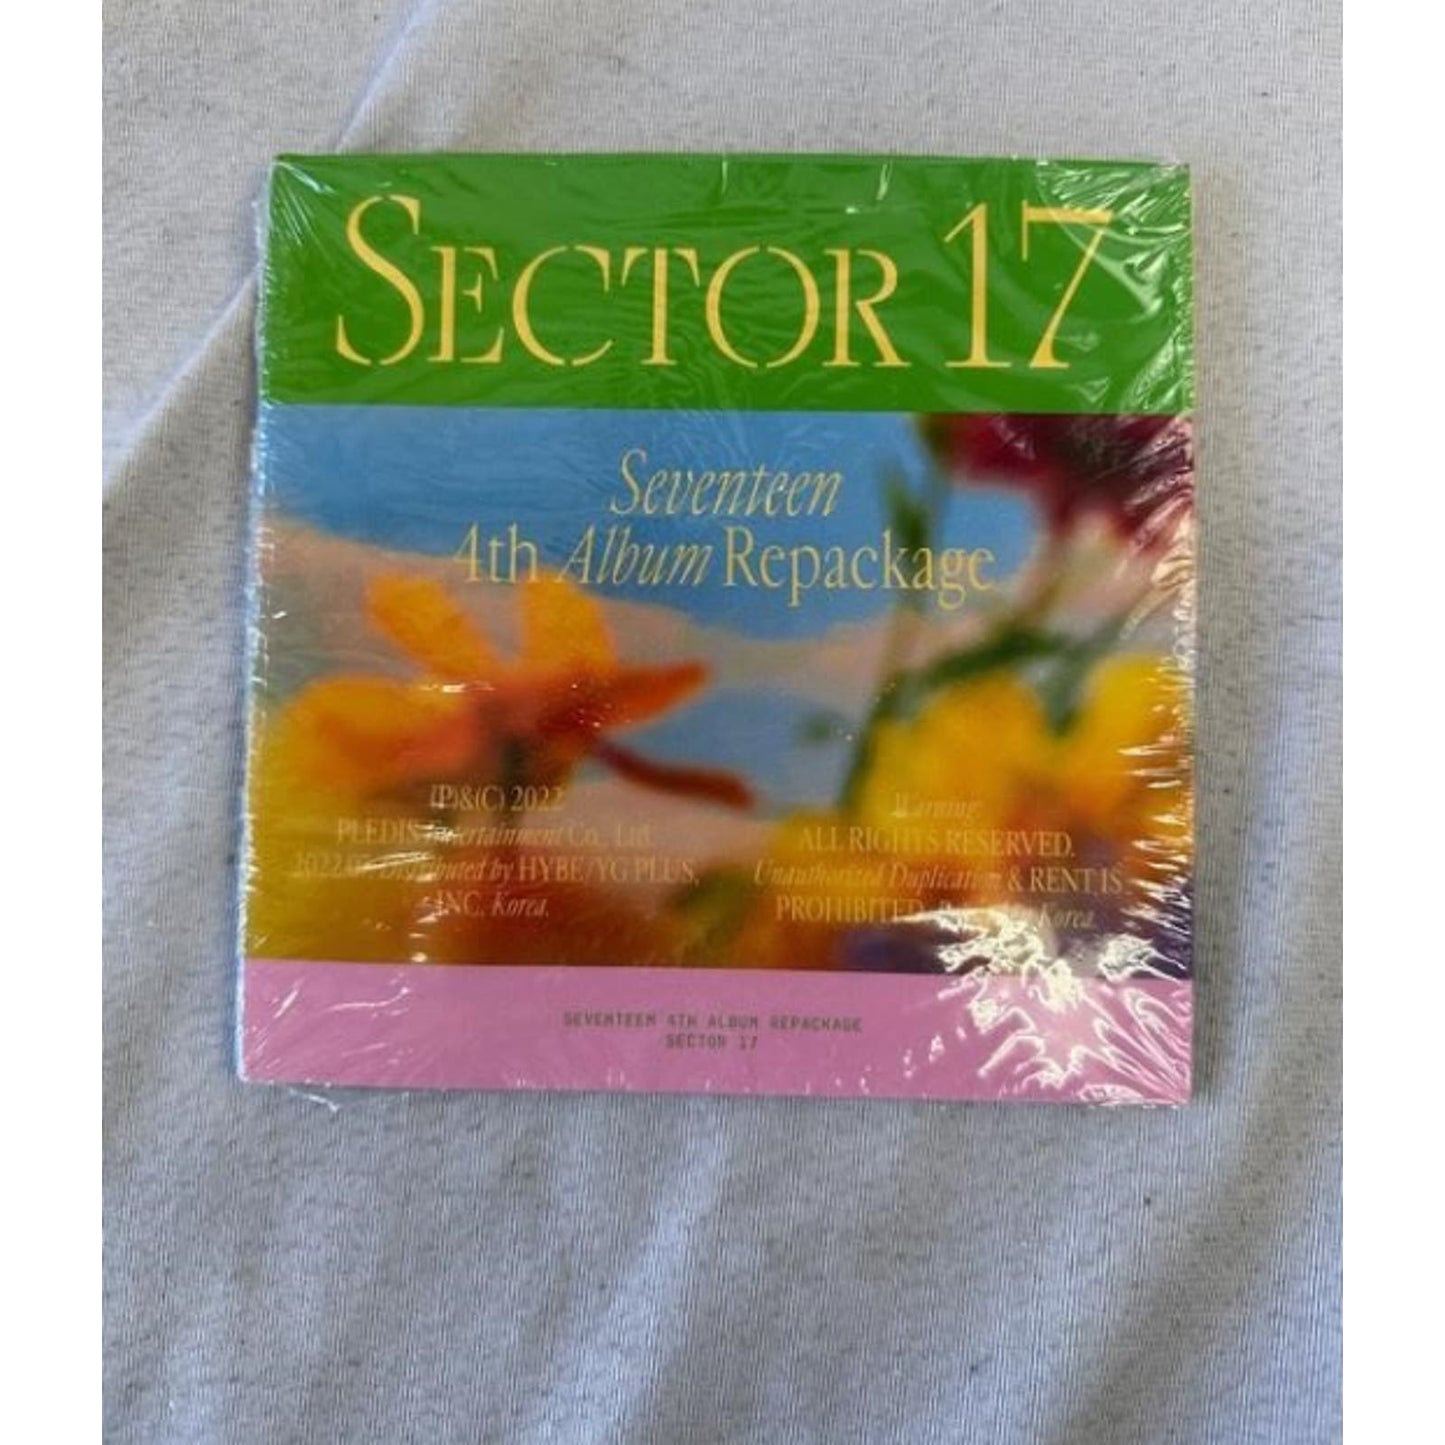 SECTOR 17, Seventeen 4th Album Repackage, Music CD, by Seventeen